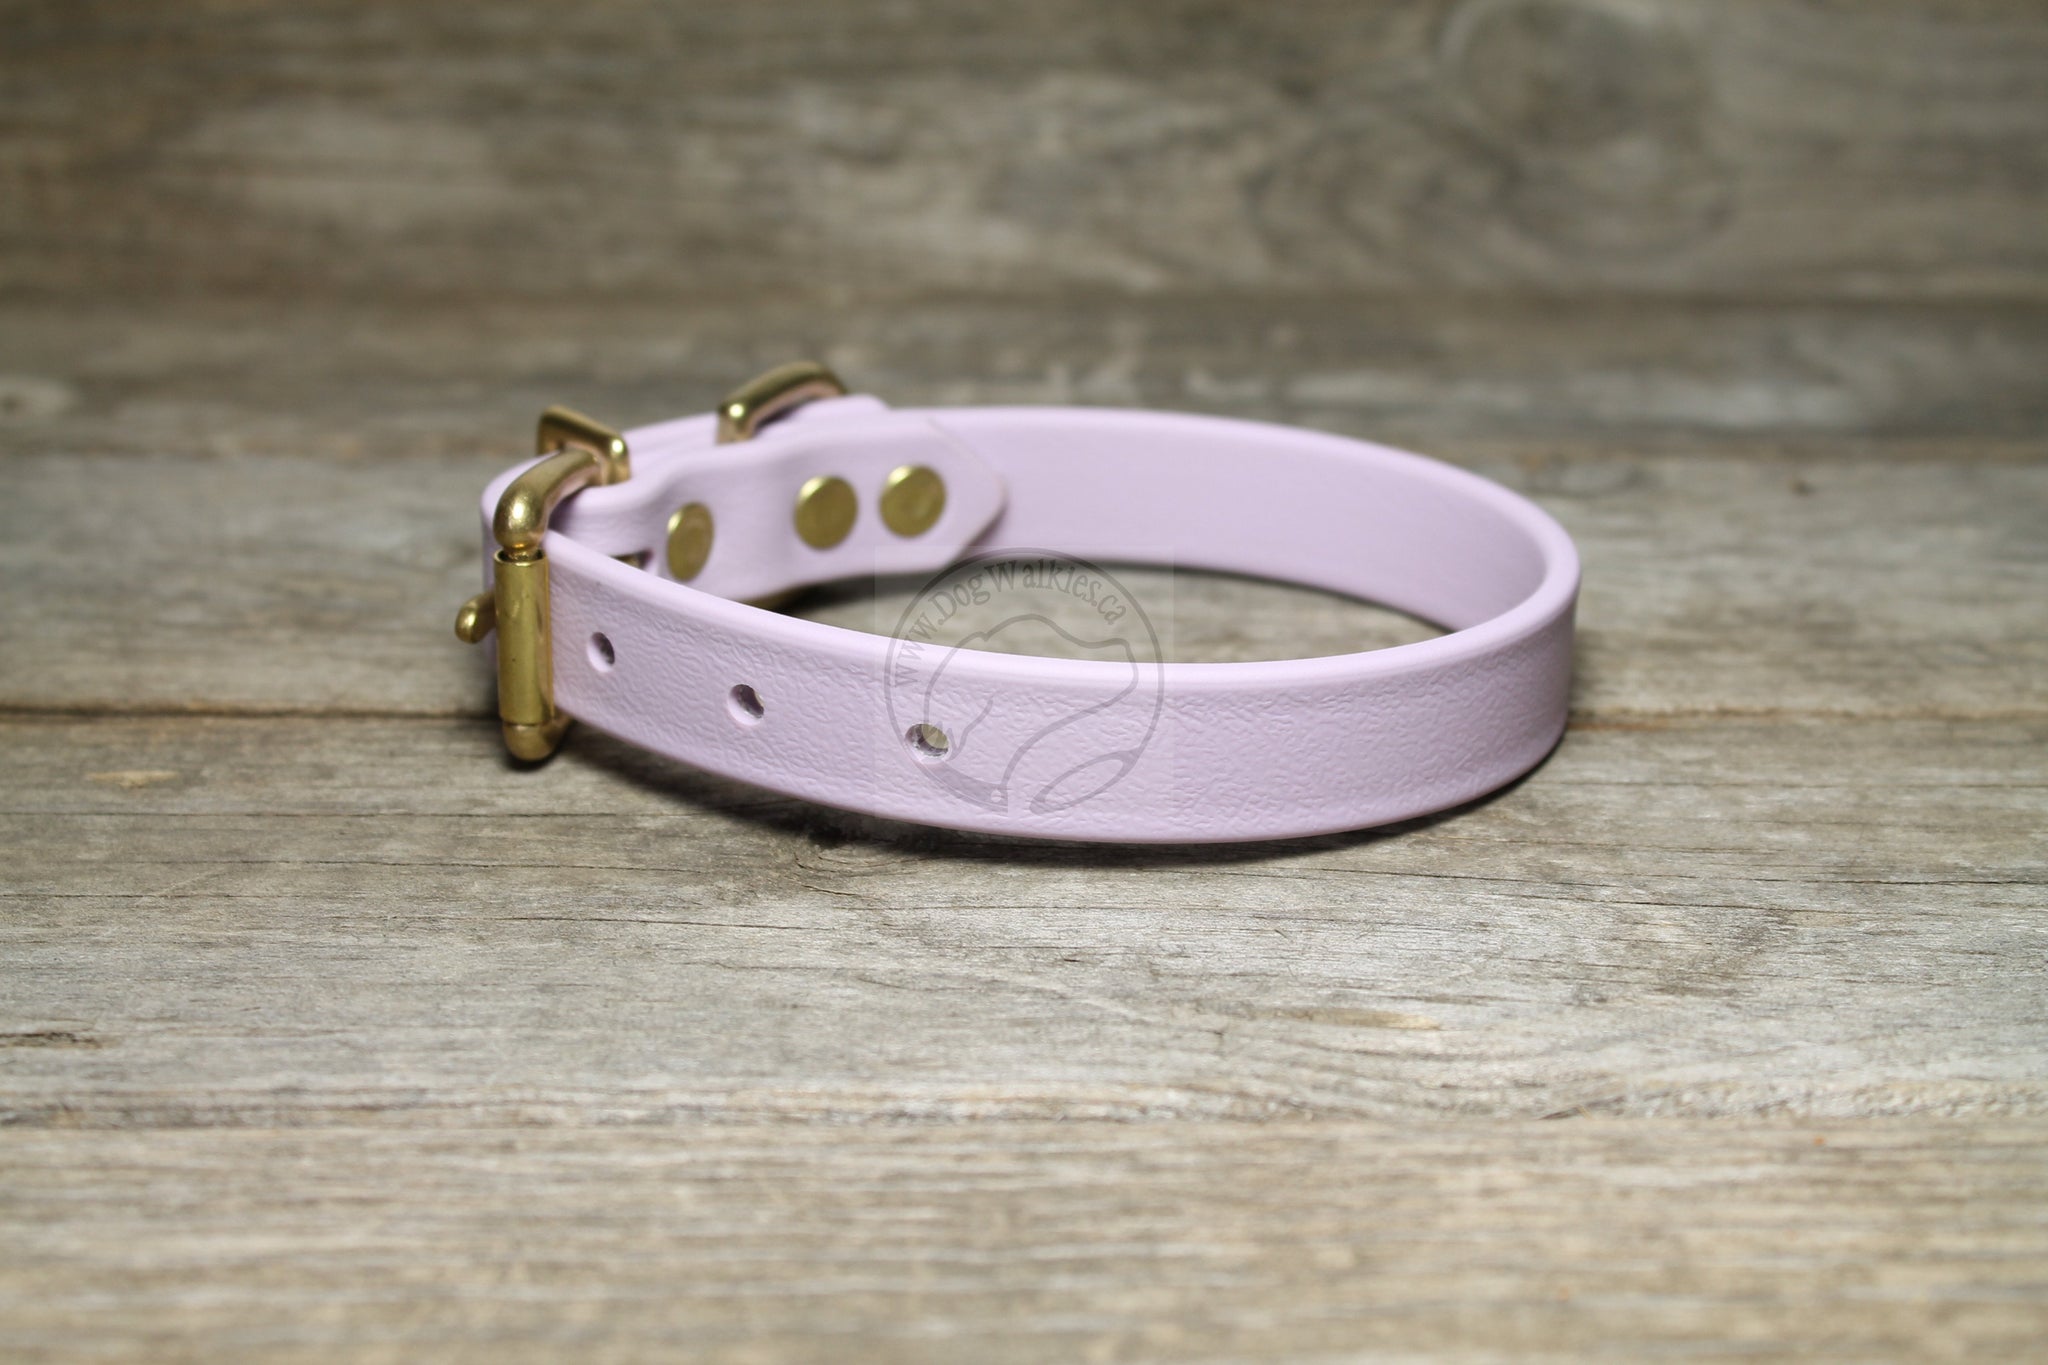 Lavender Purple Pastel Biothane Dog Collar - 3/4" (20mm) wide